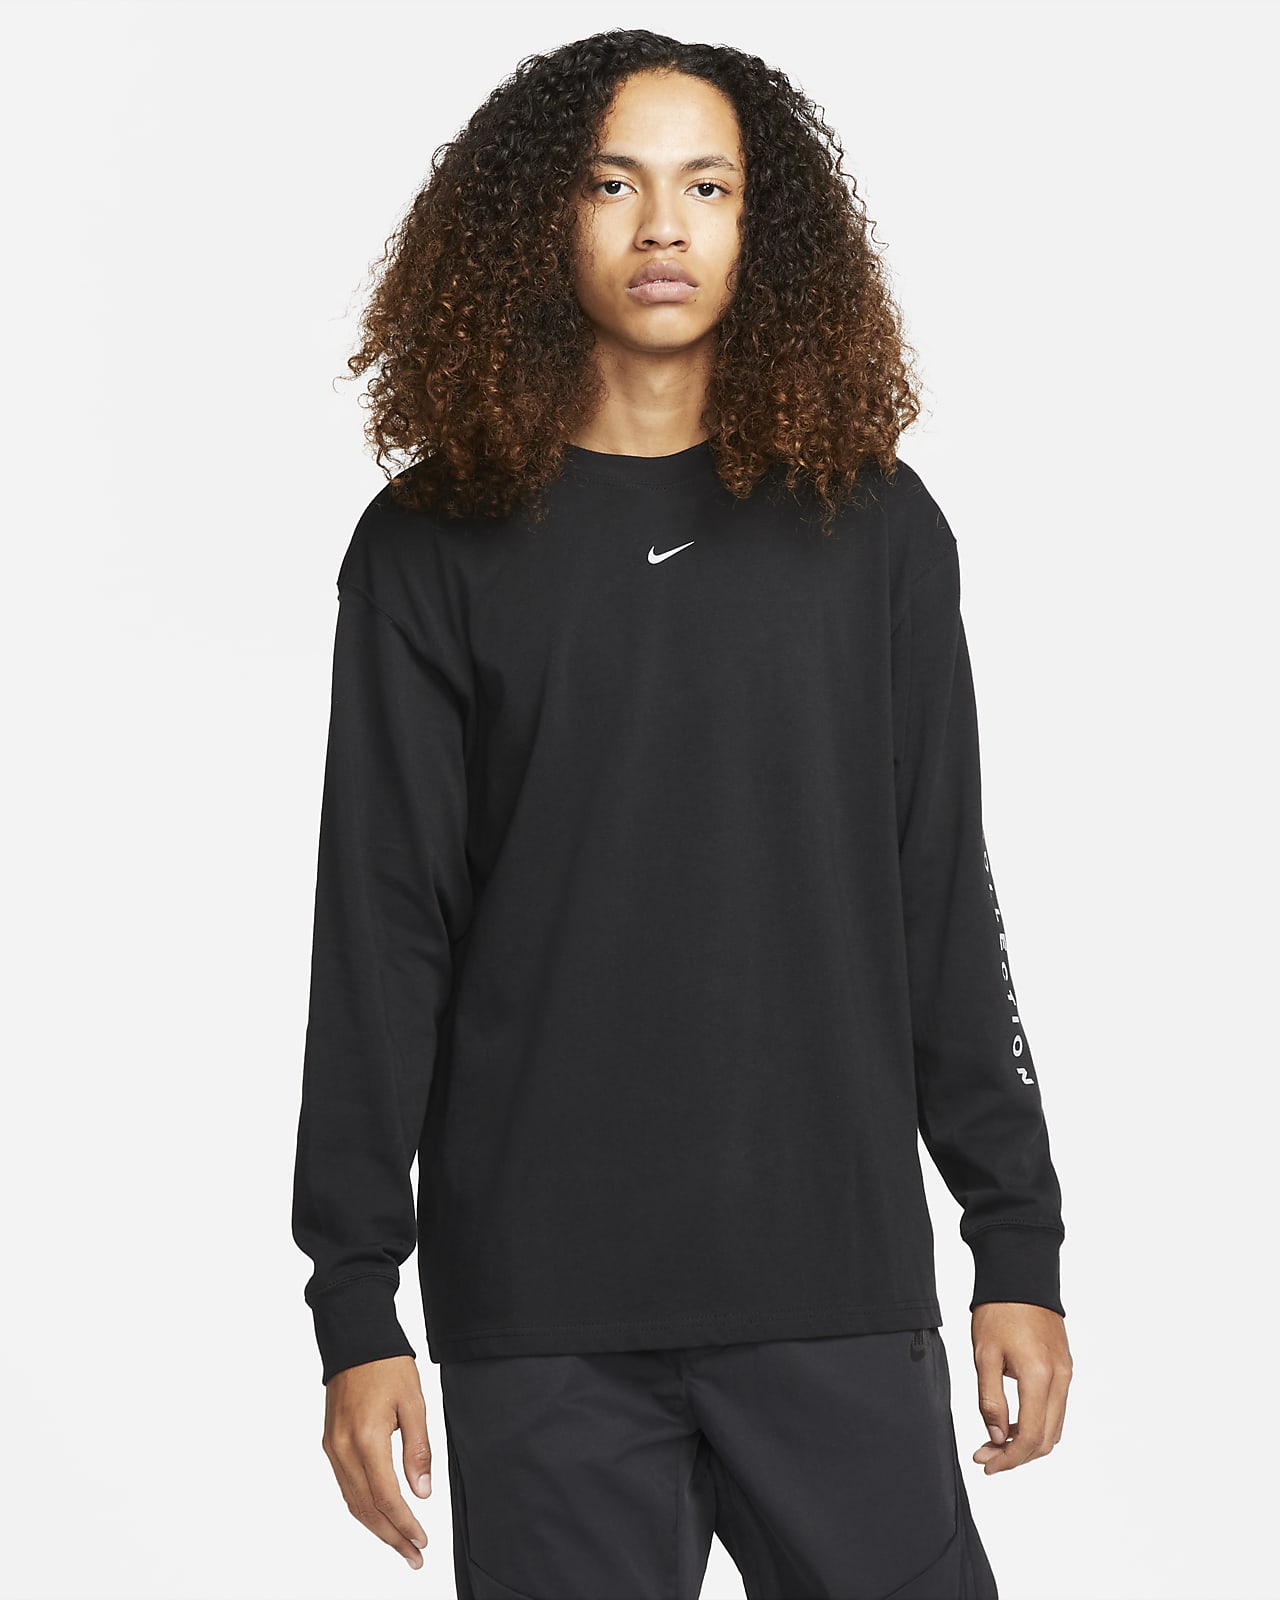 Naomi Osaka Long-Sleeve Tennis T-Shirt